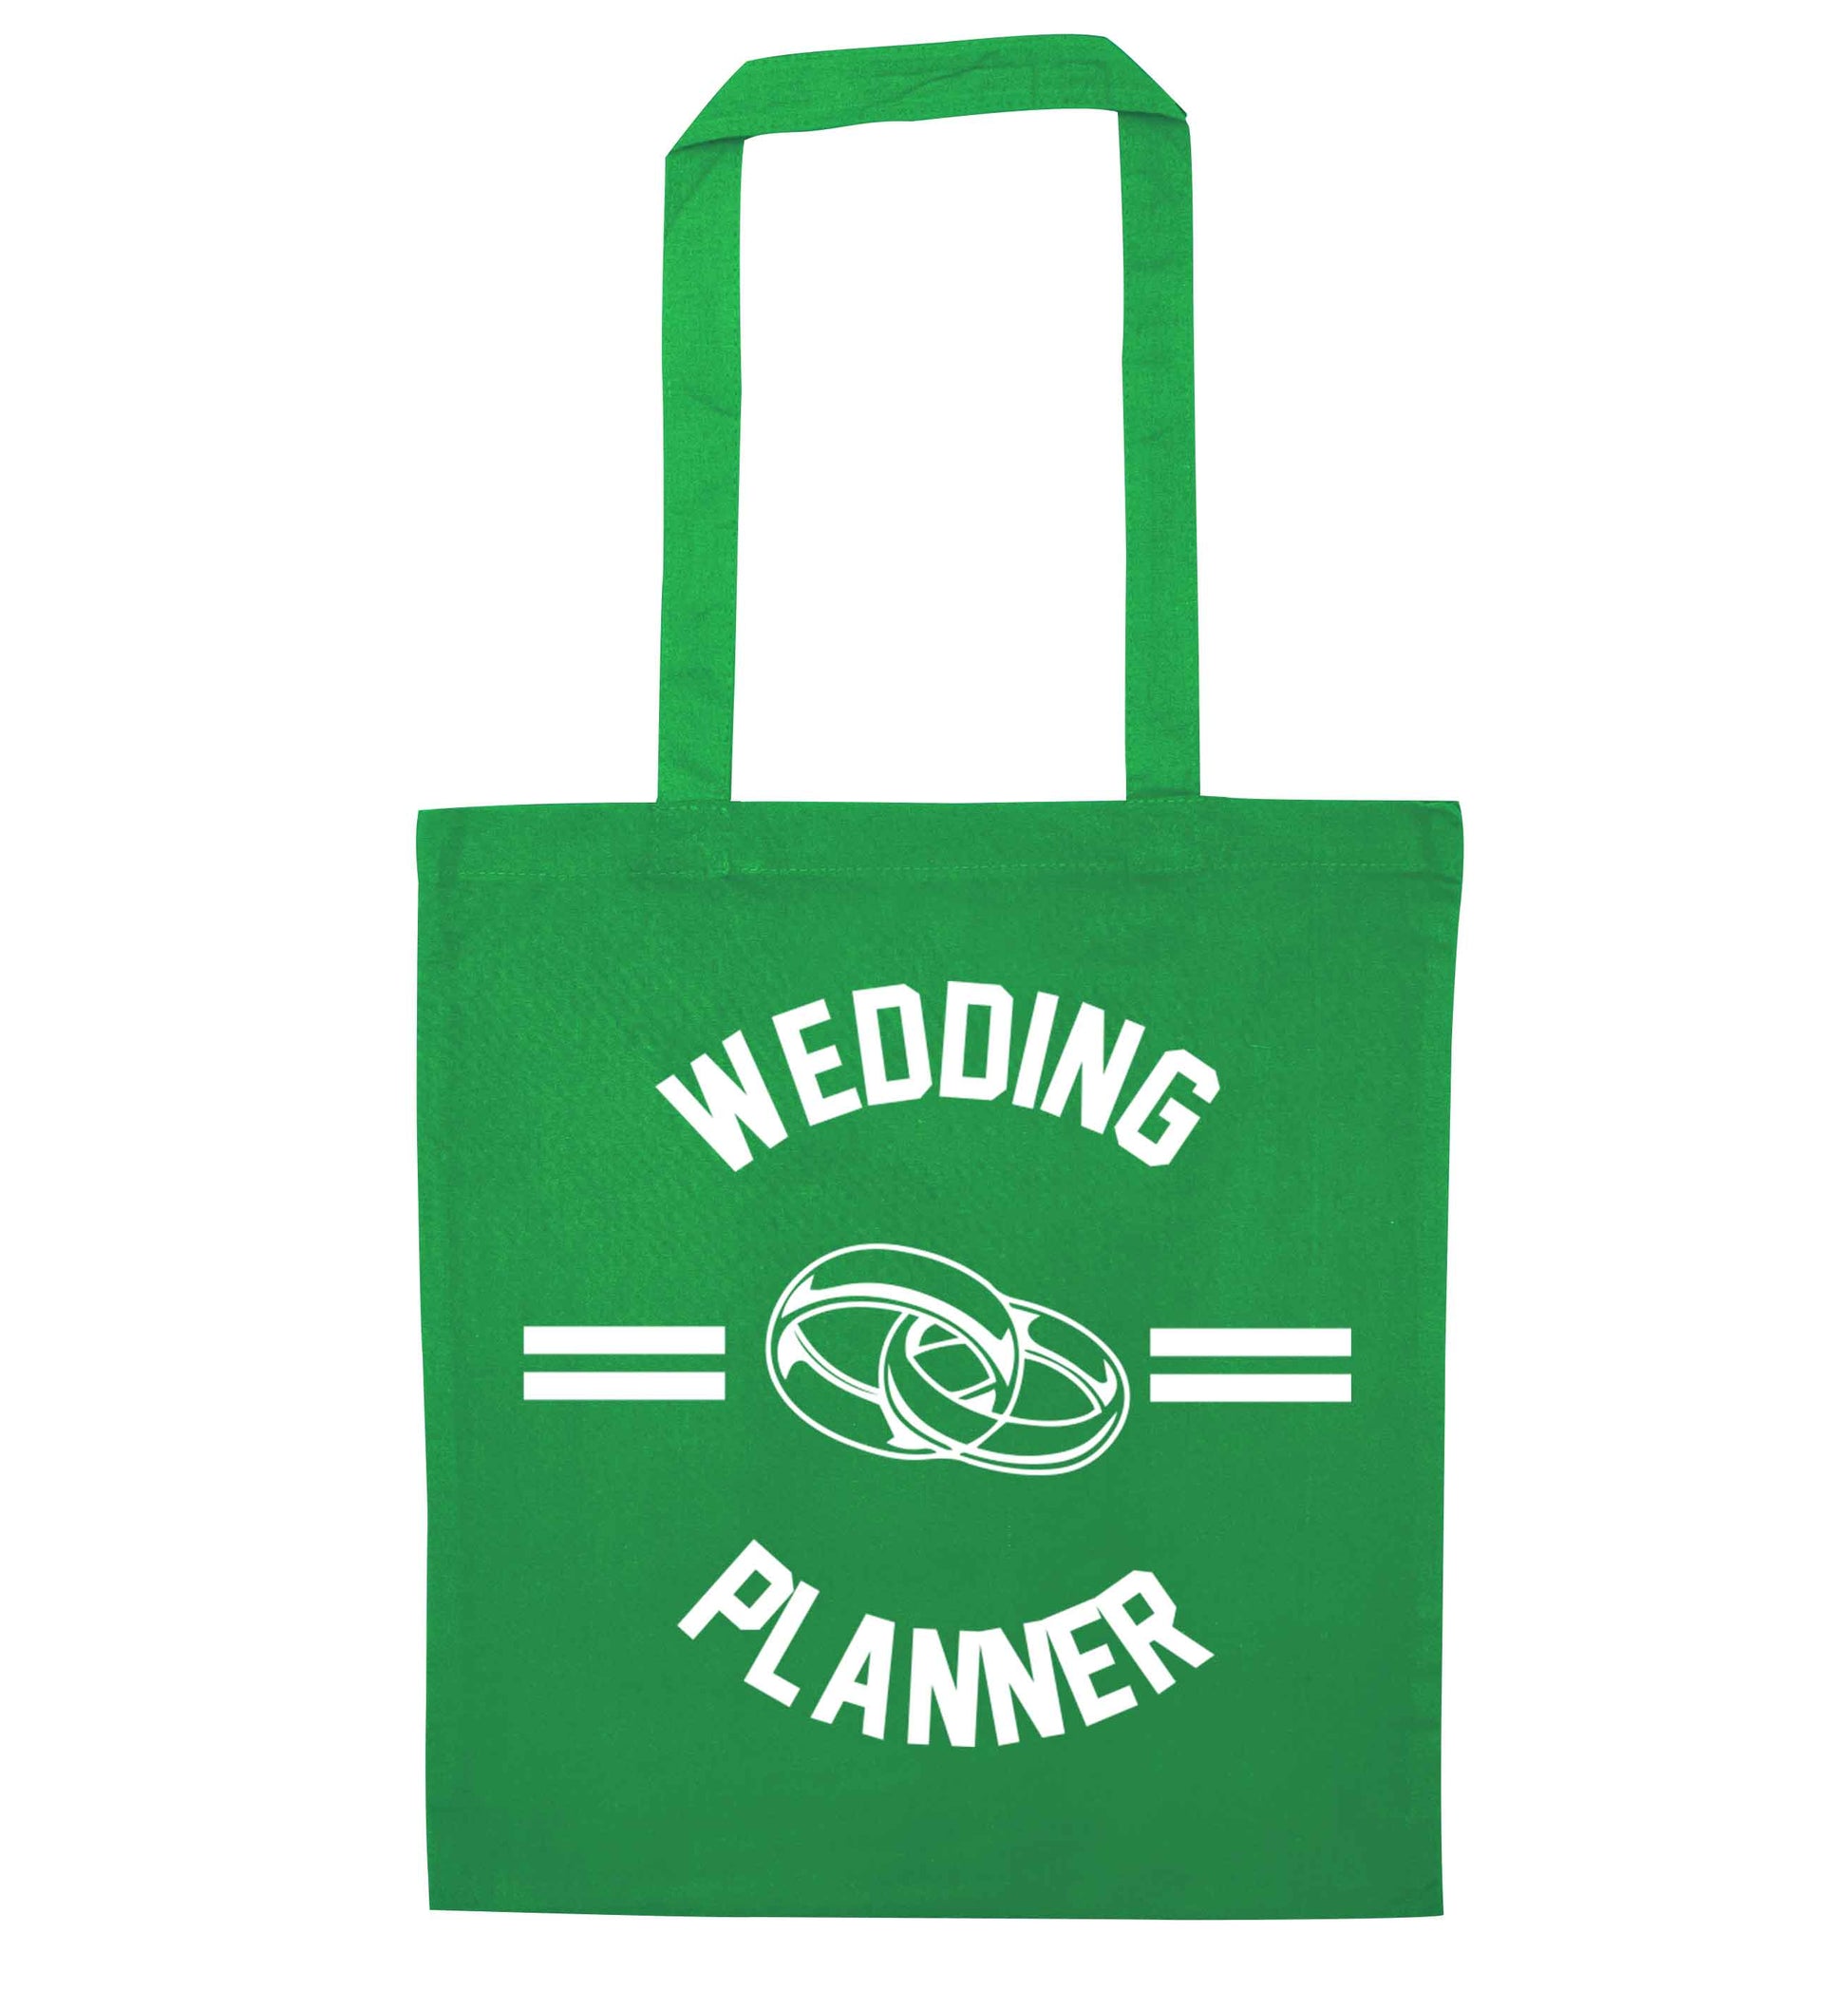 Wedding planner green tote bag